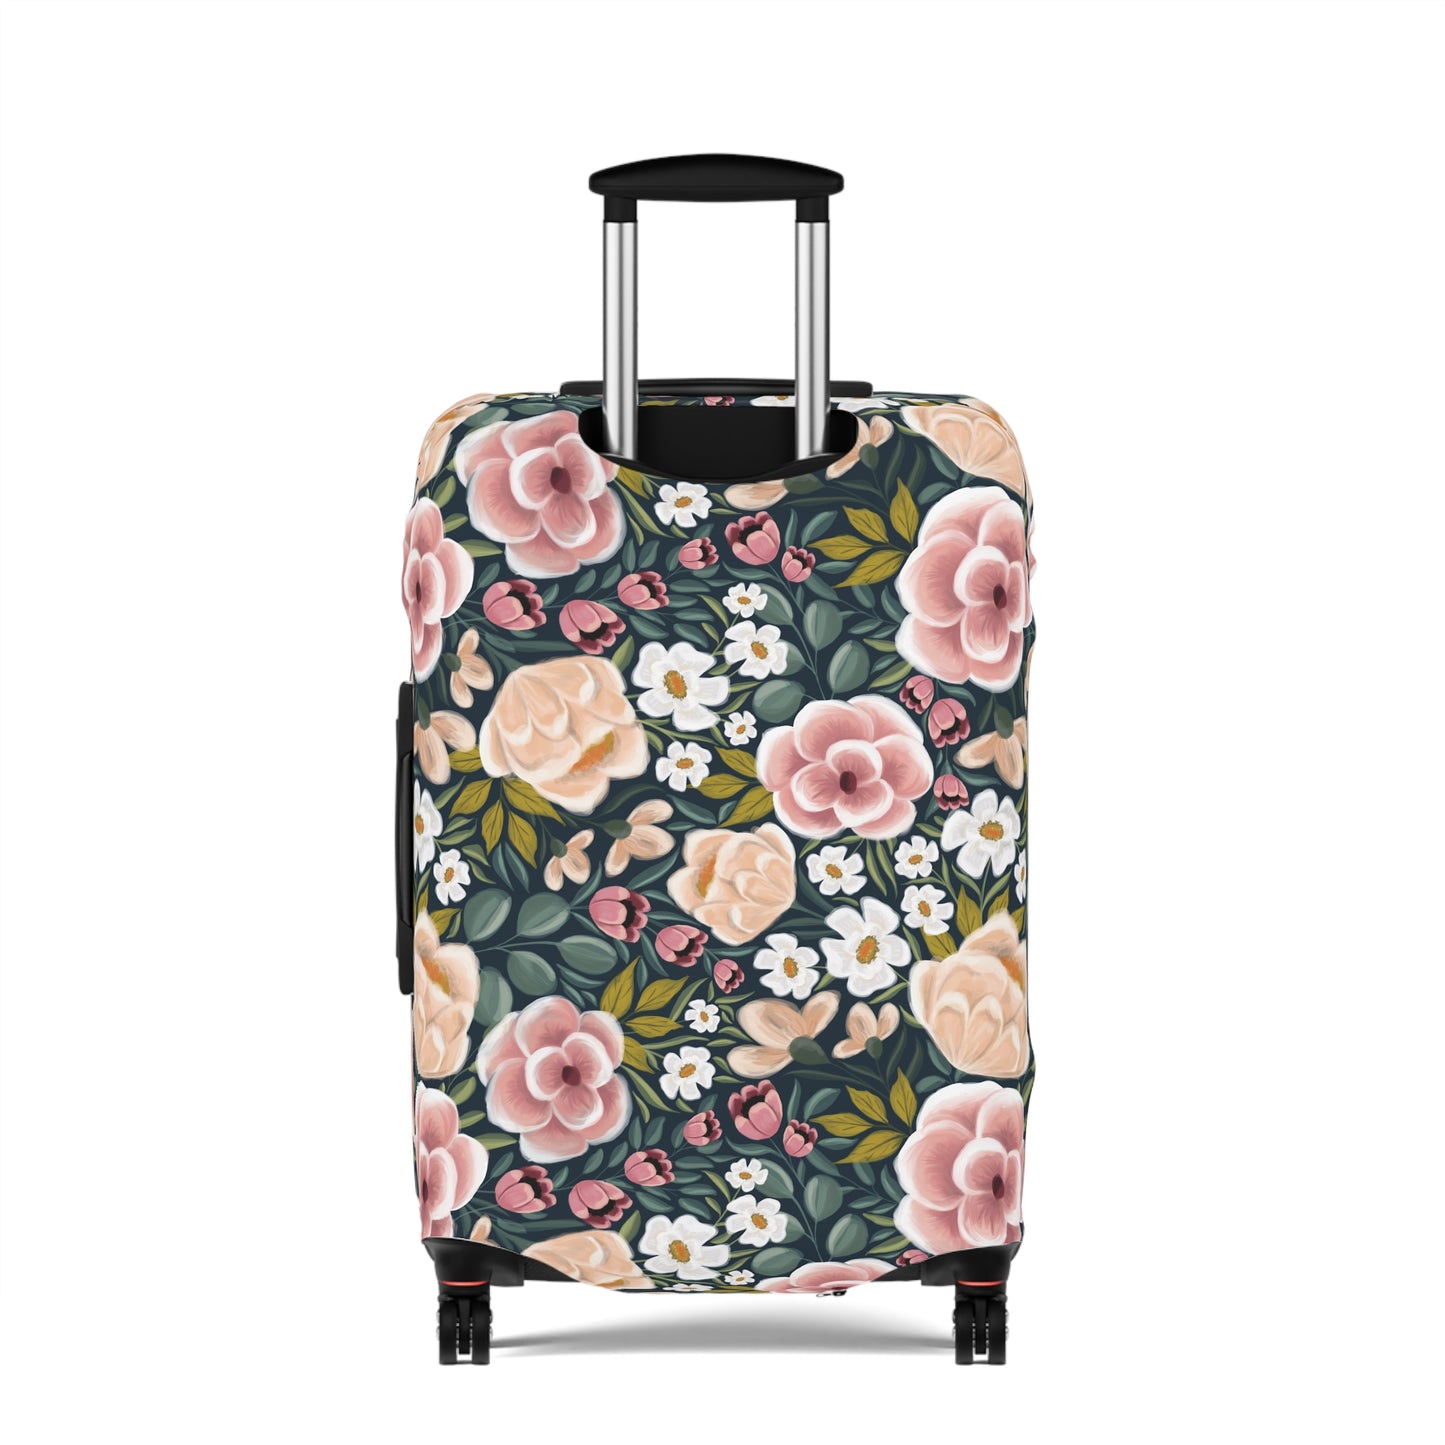 Bloom Brunch - Luggage Cover - howjoyfulshop